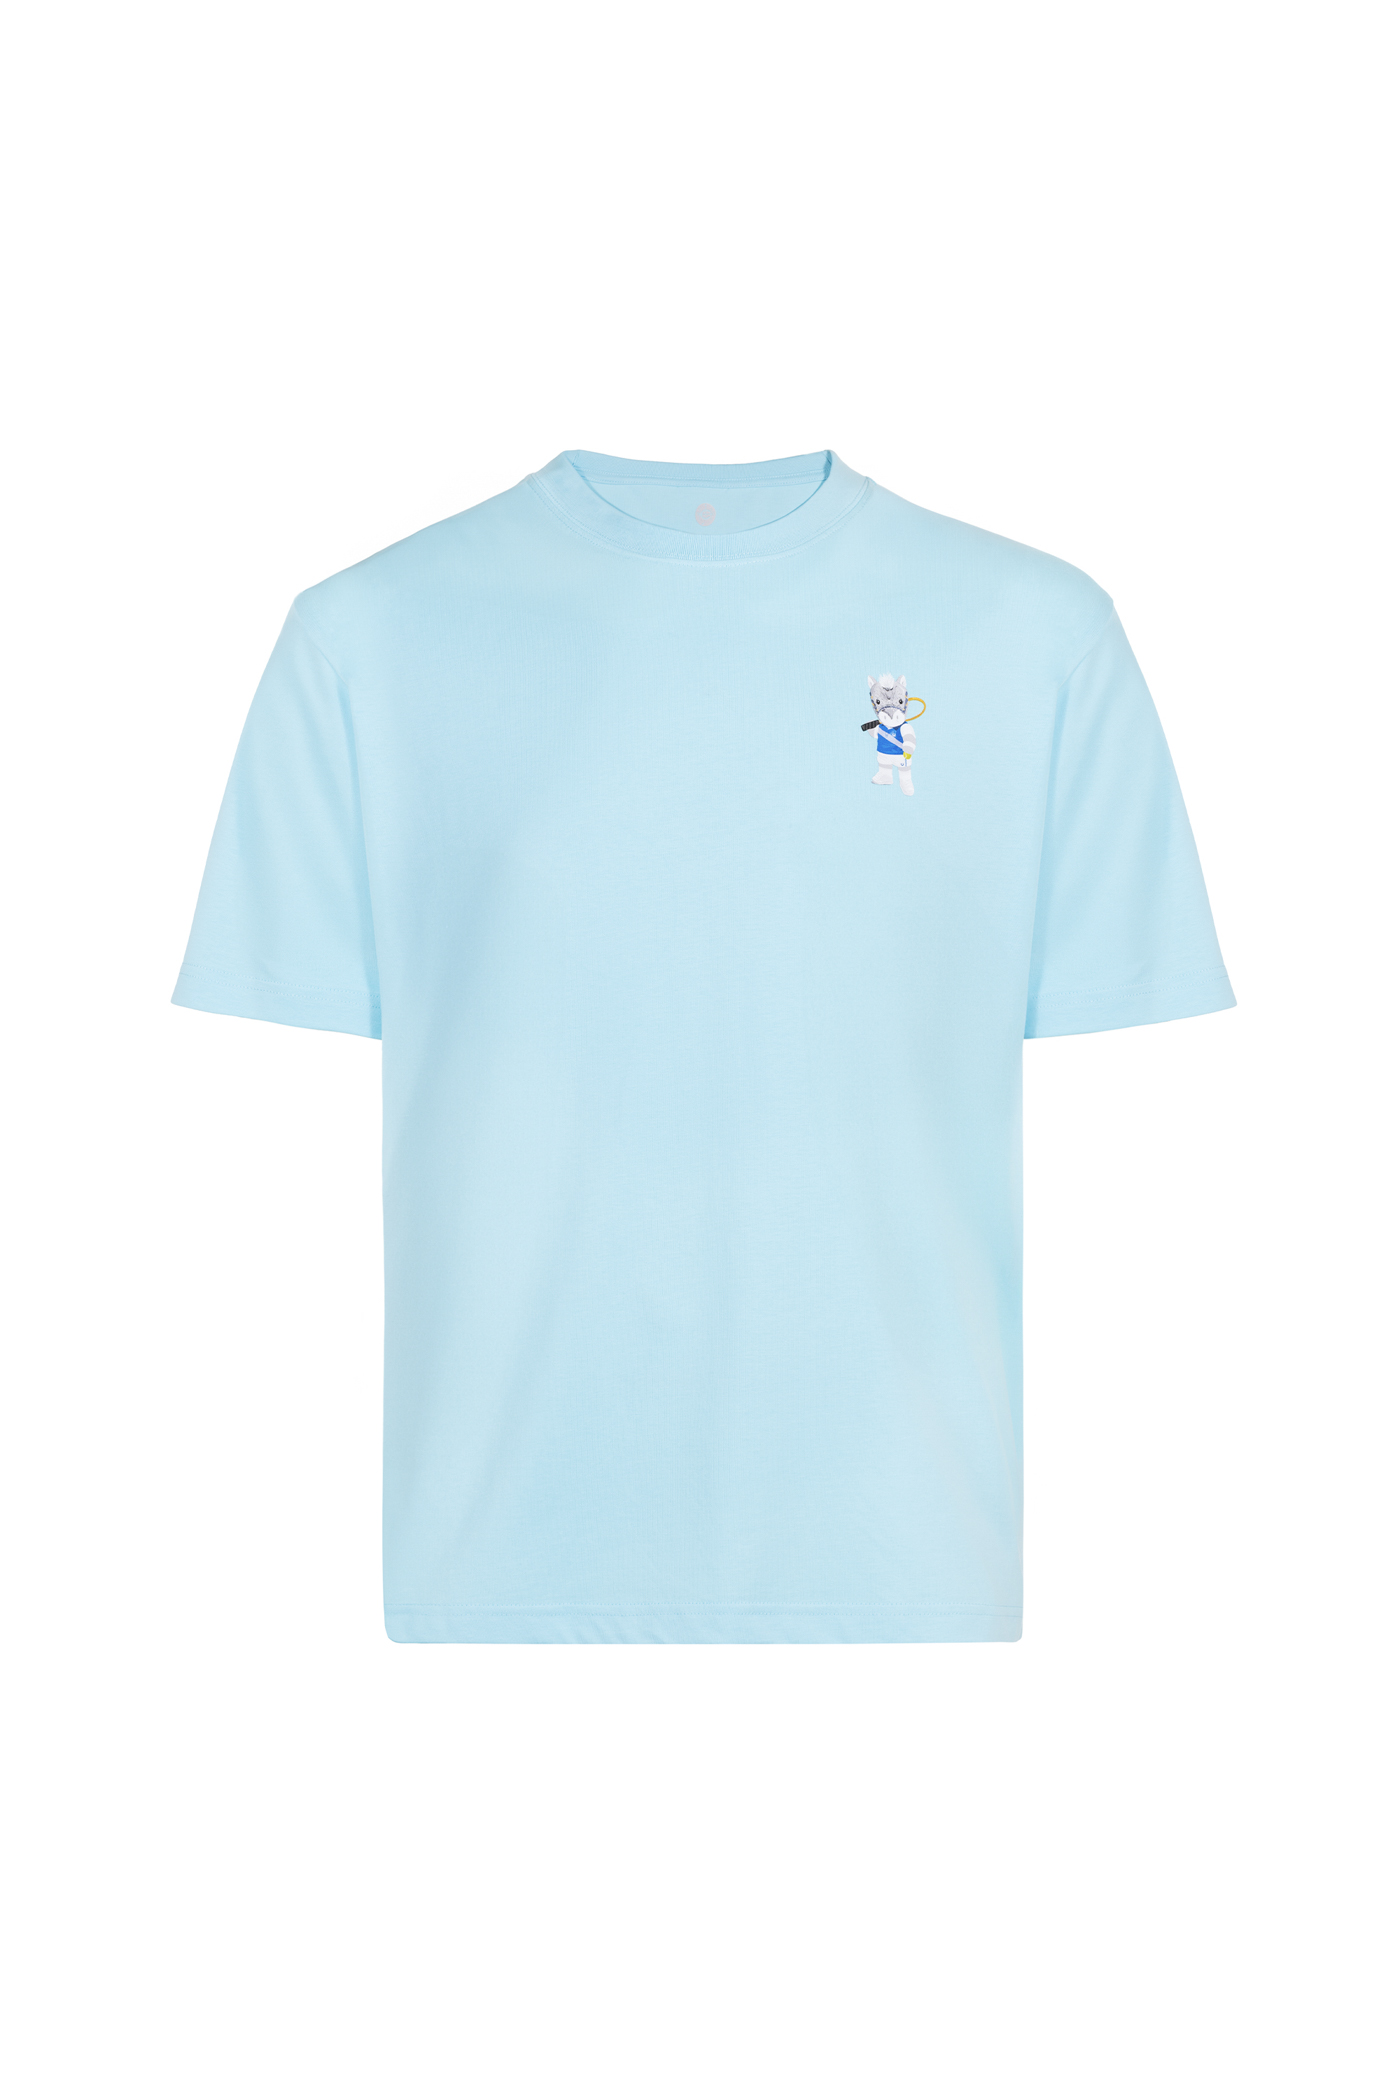 Printed Unisex Tee Shirt - Tennis